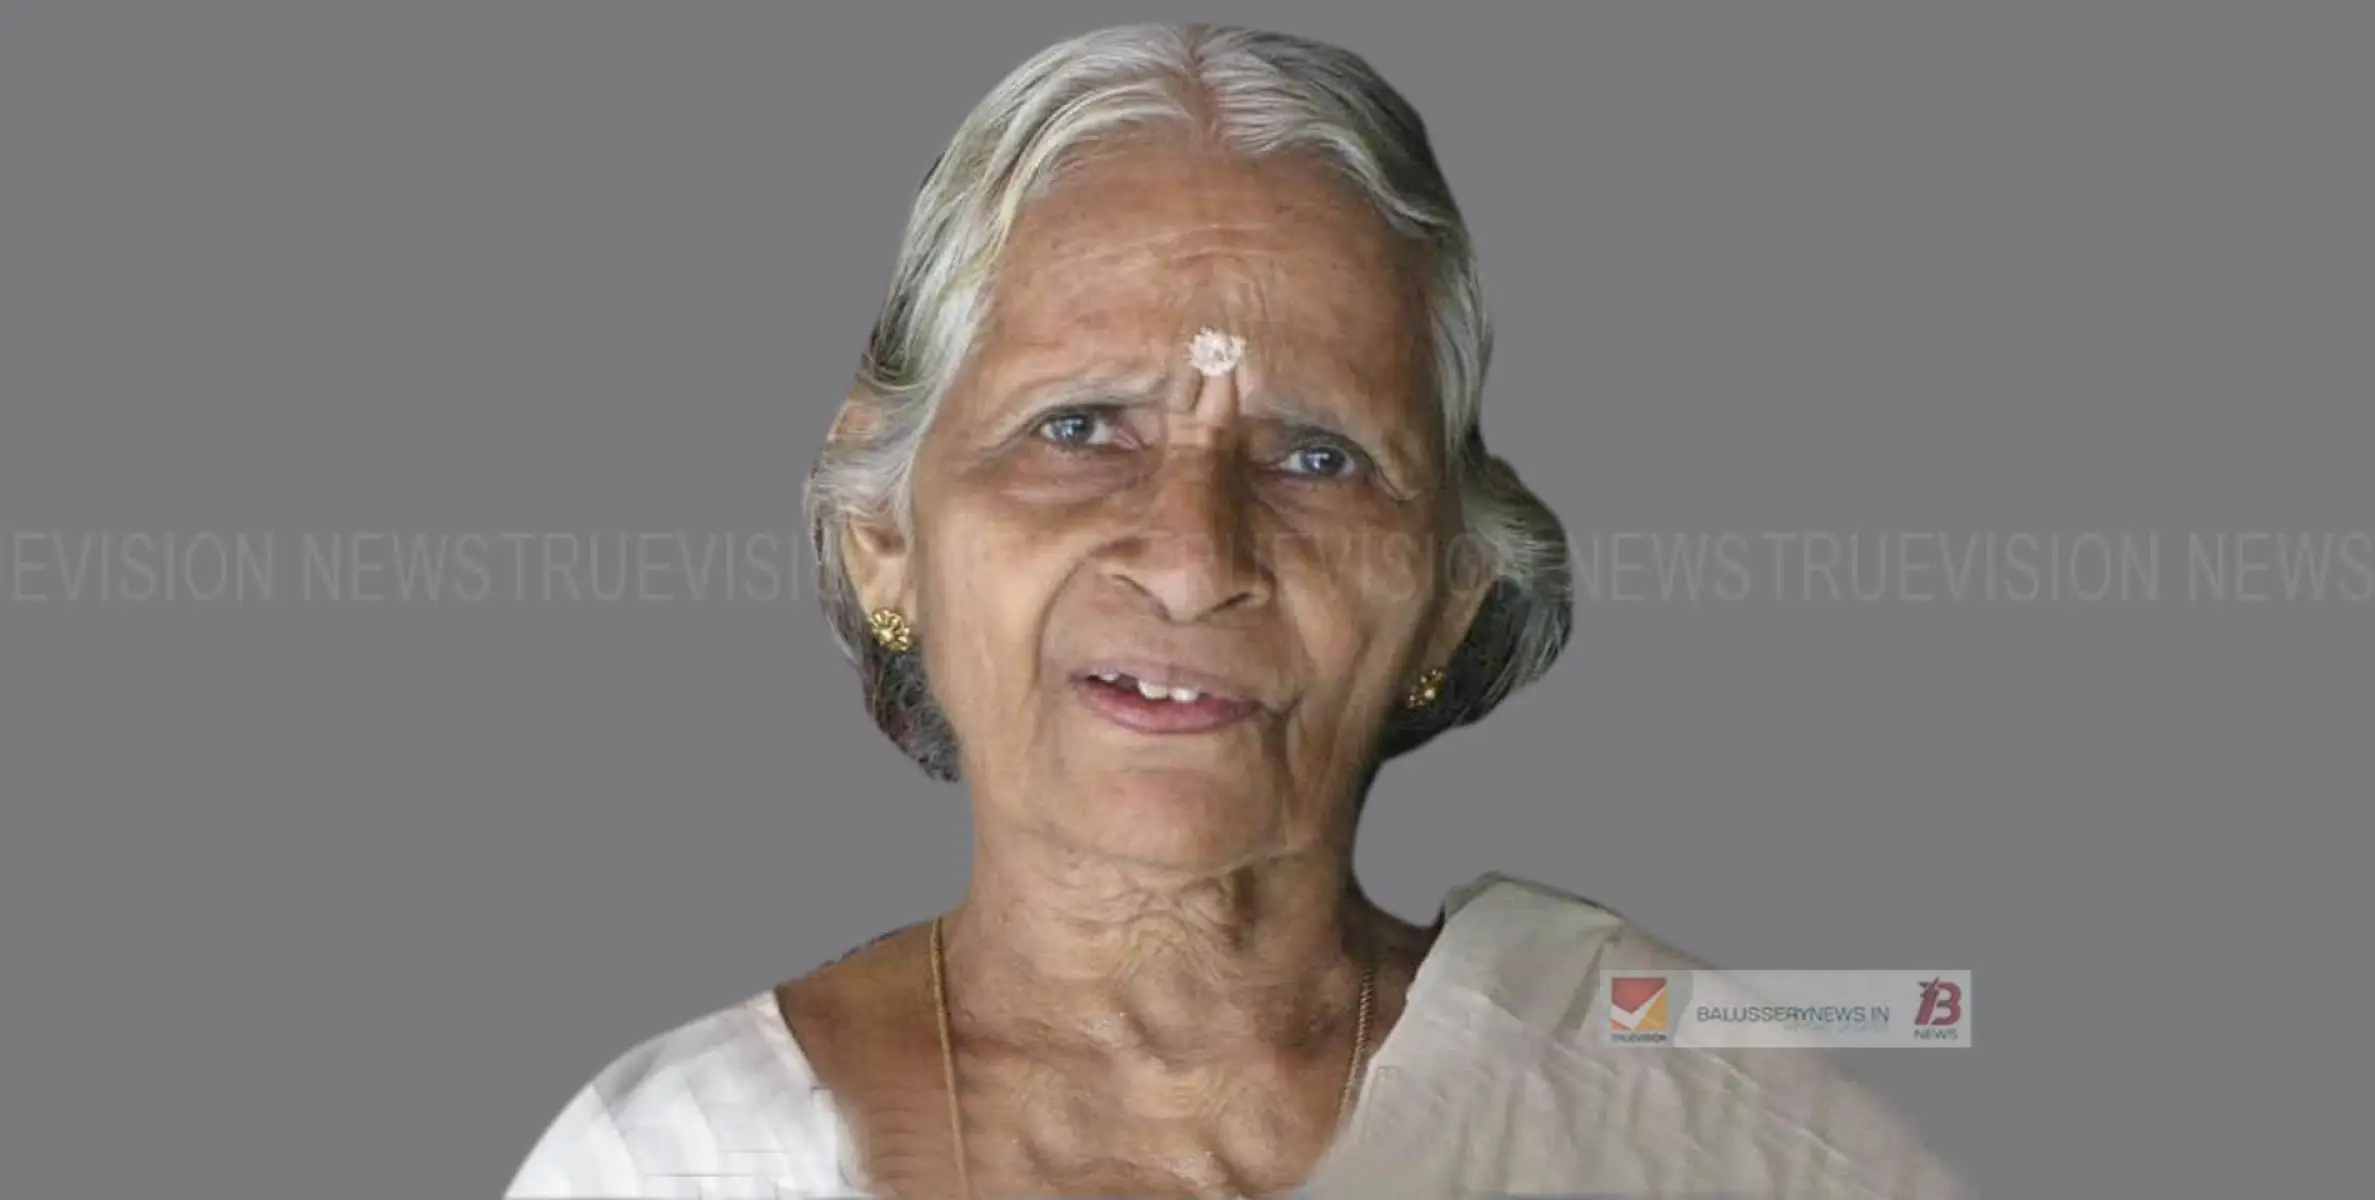 #obituary | ബാലുശ്ശേരി പിലാവുള്ളതില്‍ ദാക്ഷായണി അമ്മ അന്തരിച്ചു. 